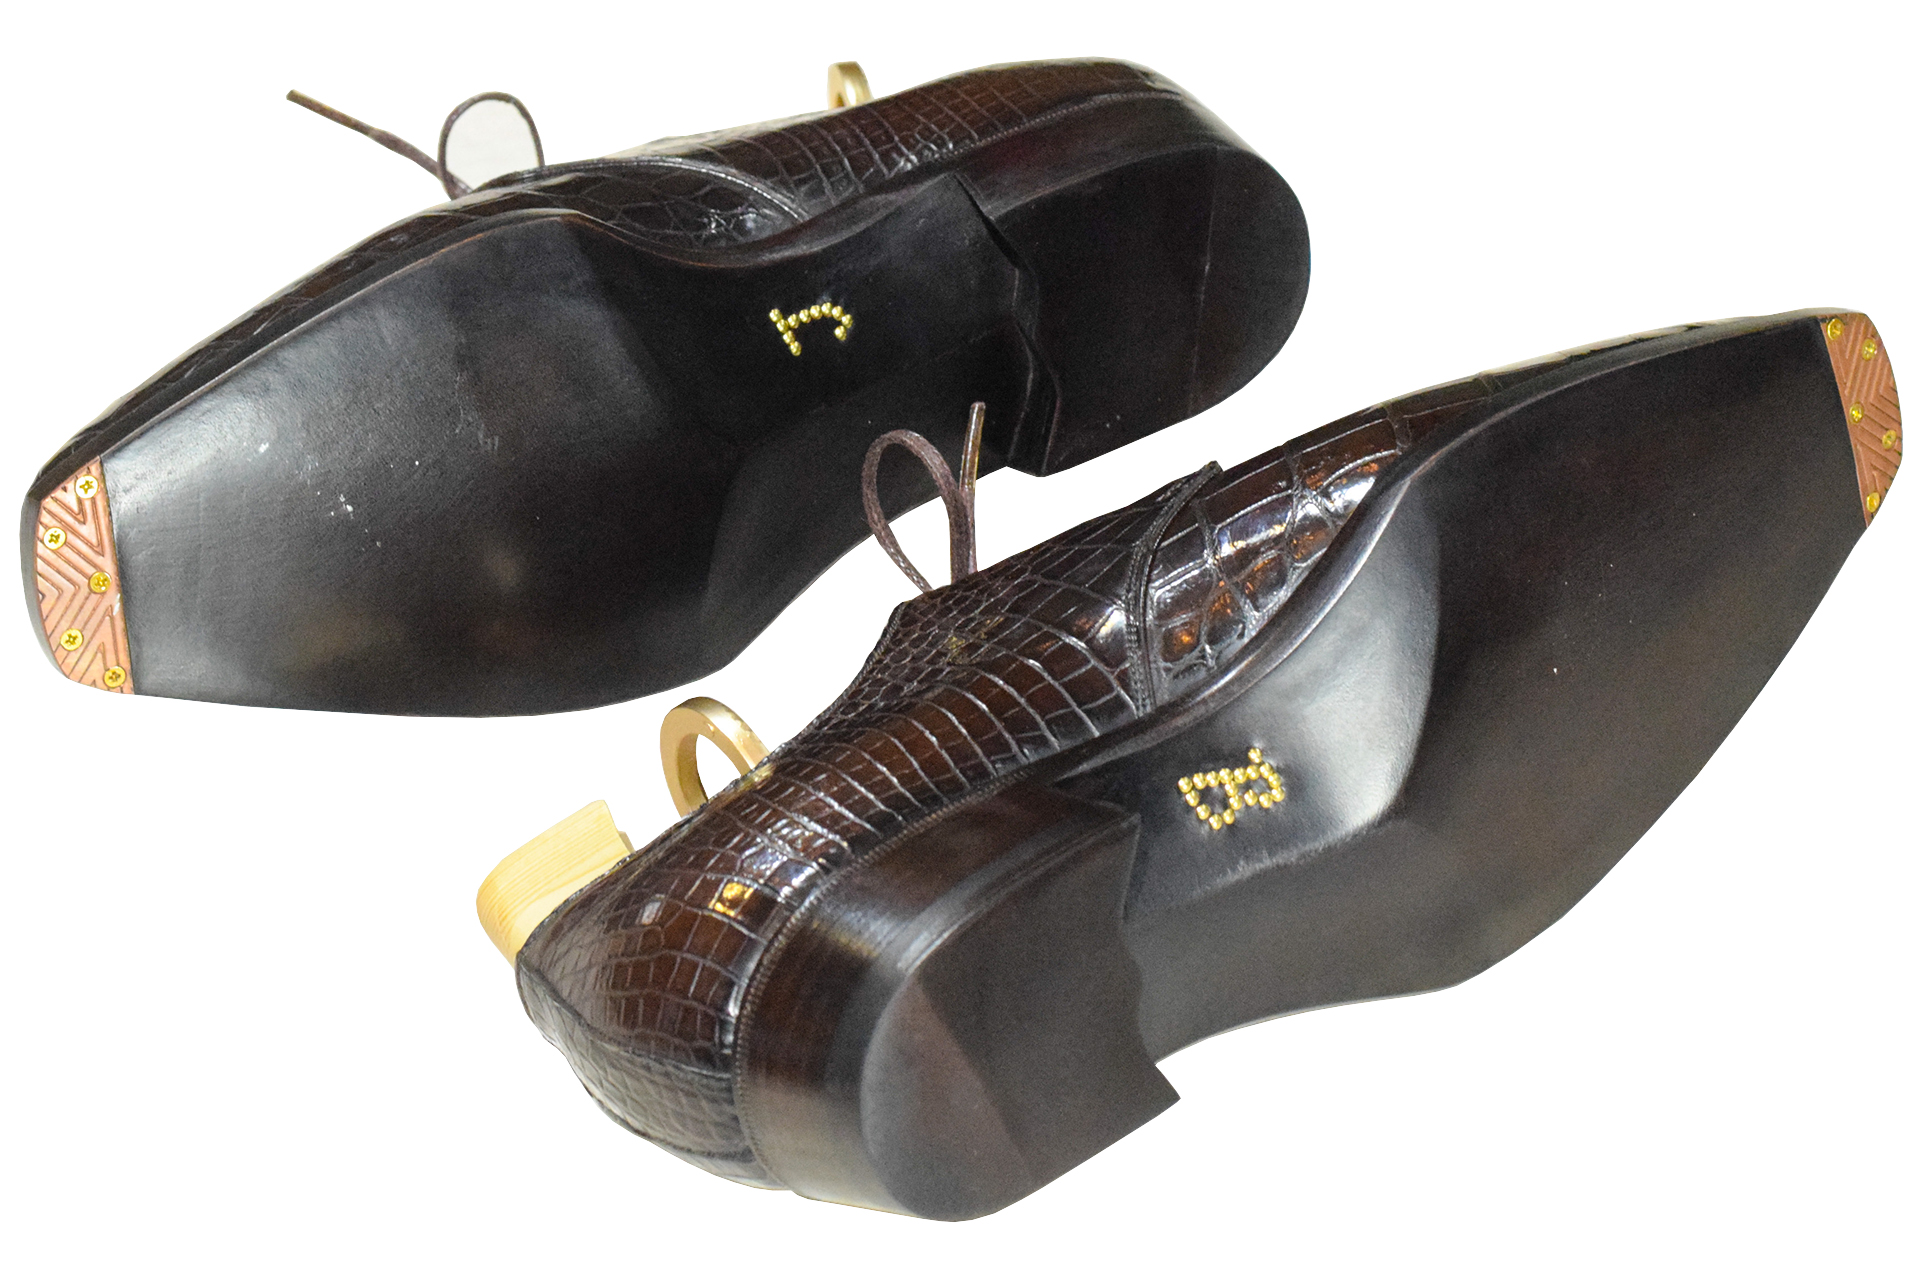 MTO Derby Plain toe shoes 3 eyelets - Crocodile leather